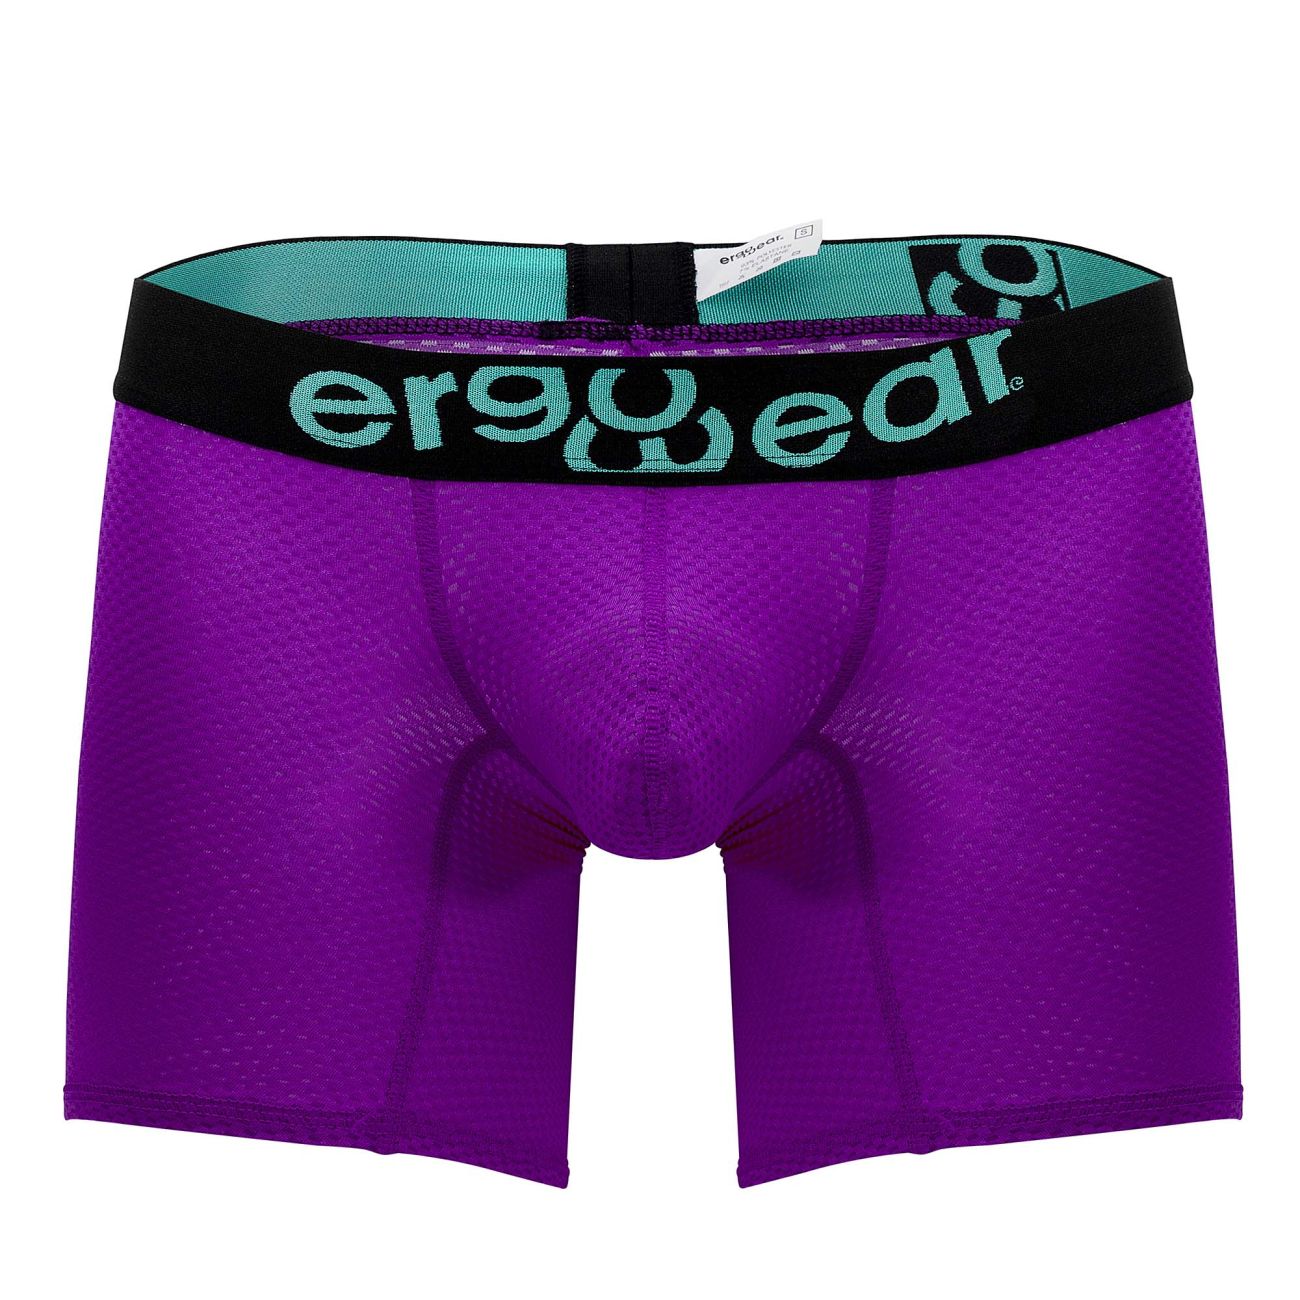 ErgoWear EW1398 MAX Boxer Briefs Purple